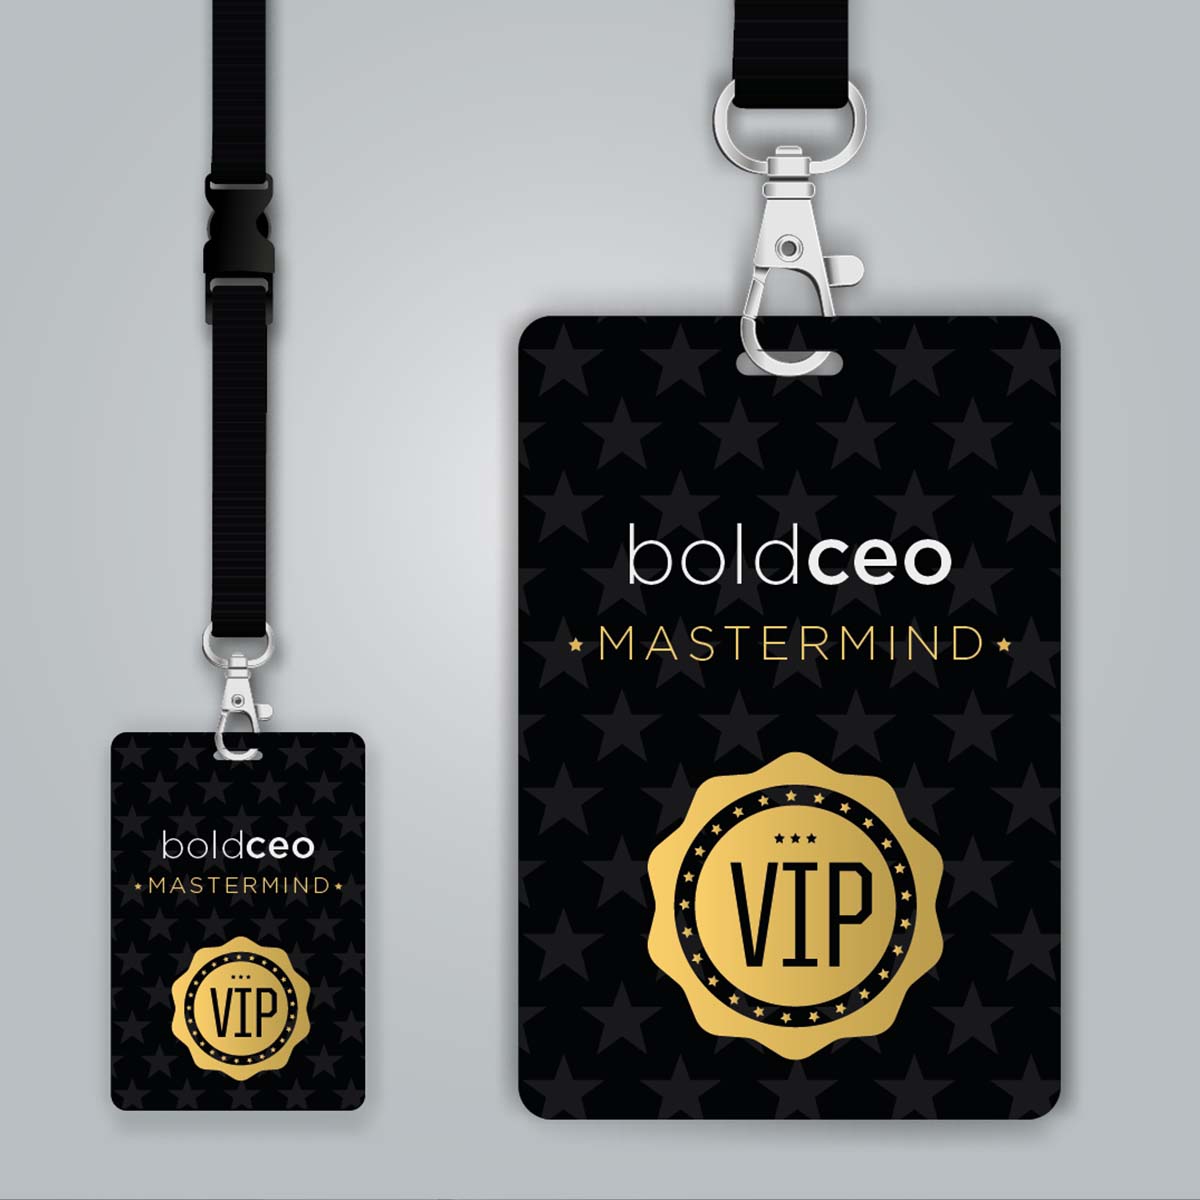 boldceo-mastermind-VIP-ticket